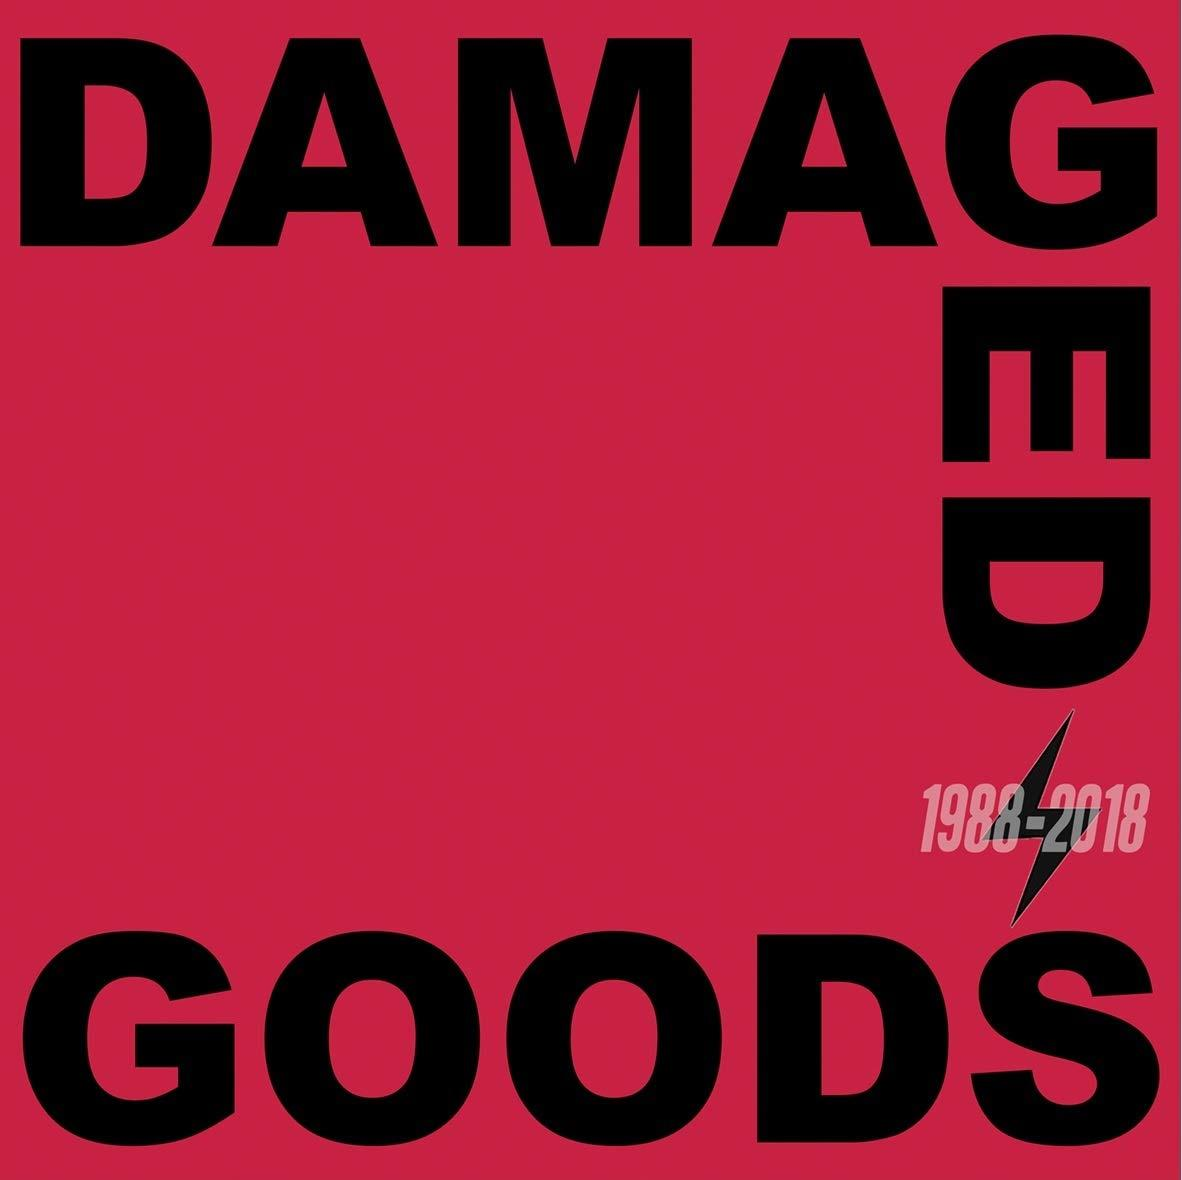 VARIOUS - (Vinyl) 1988-2018 Goods - Damaged